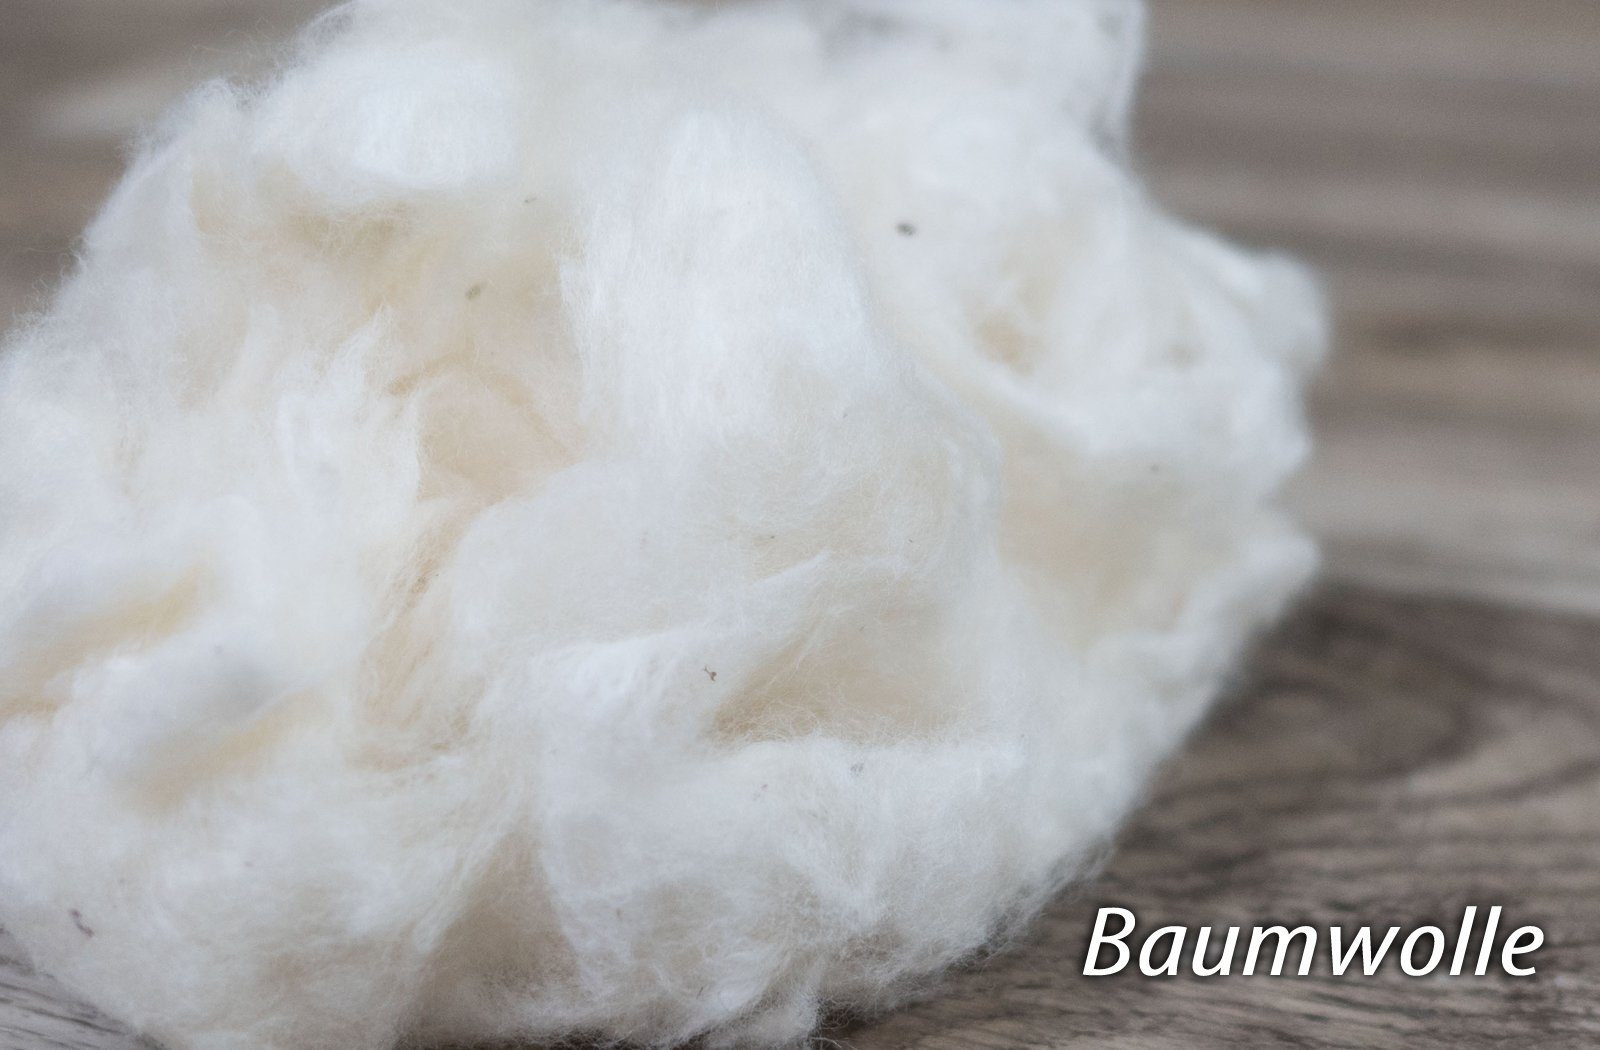 Baumwollbettdecke, Nancy, franknatur, Füllung: 100% Baumwolle kbA, 100% kbA, Baumwolle Sommer-Bettdecke leichte Bezug